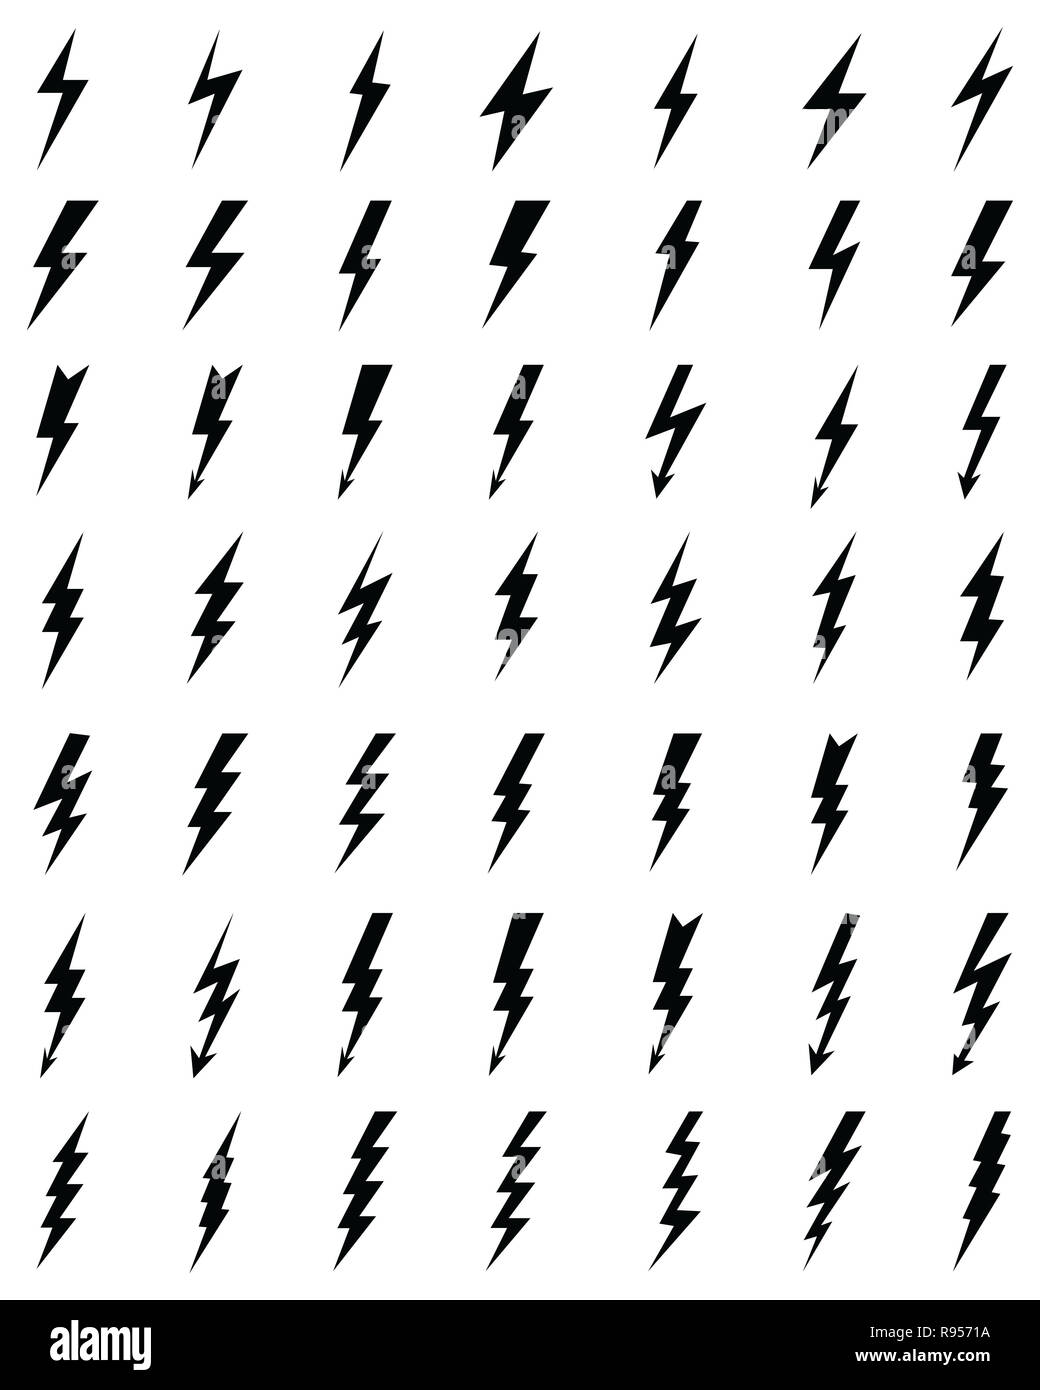 Black icons of thunder lighting on a white background Stock Photo